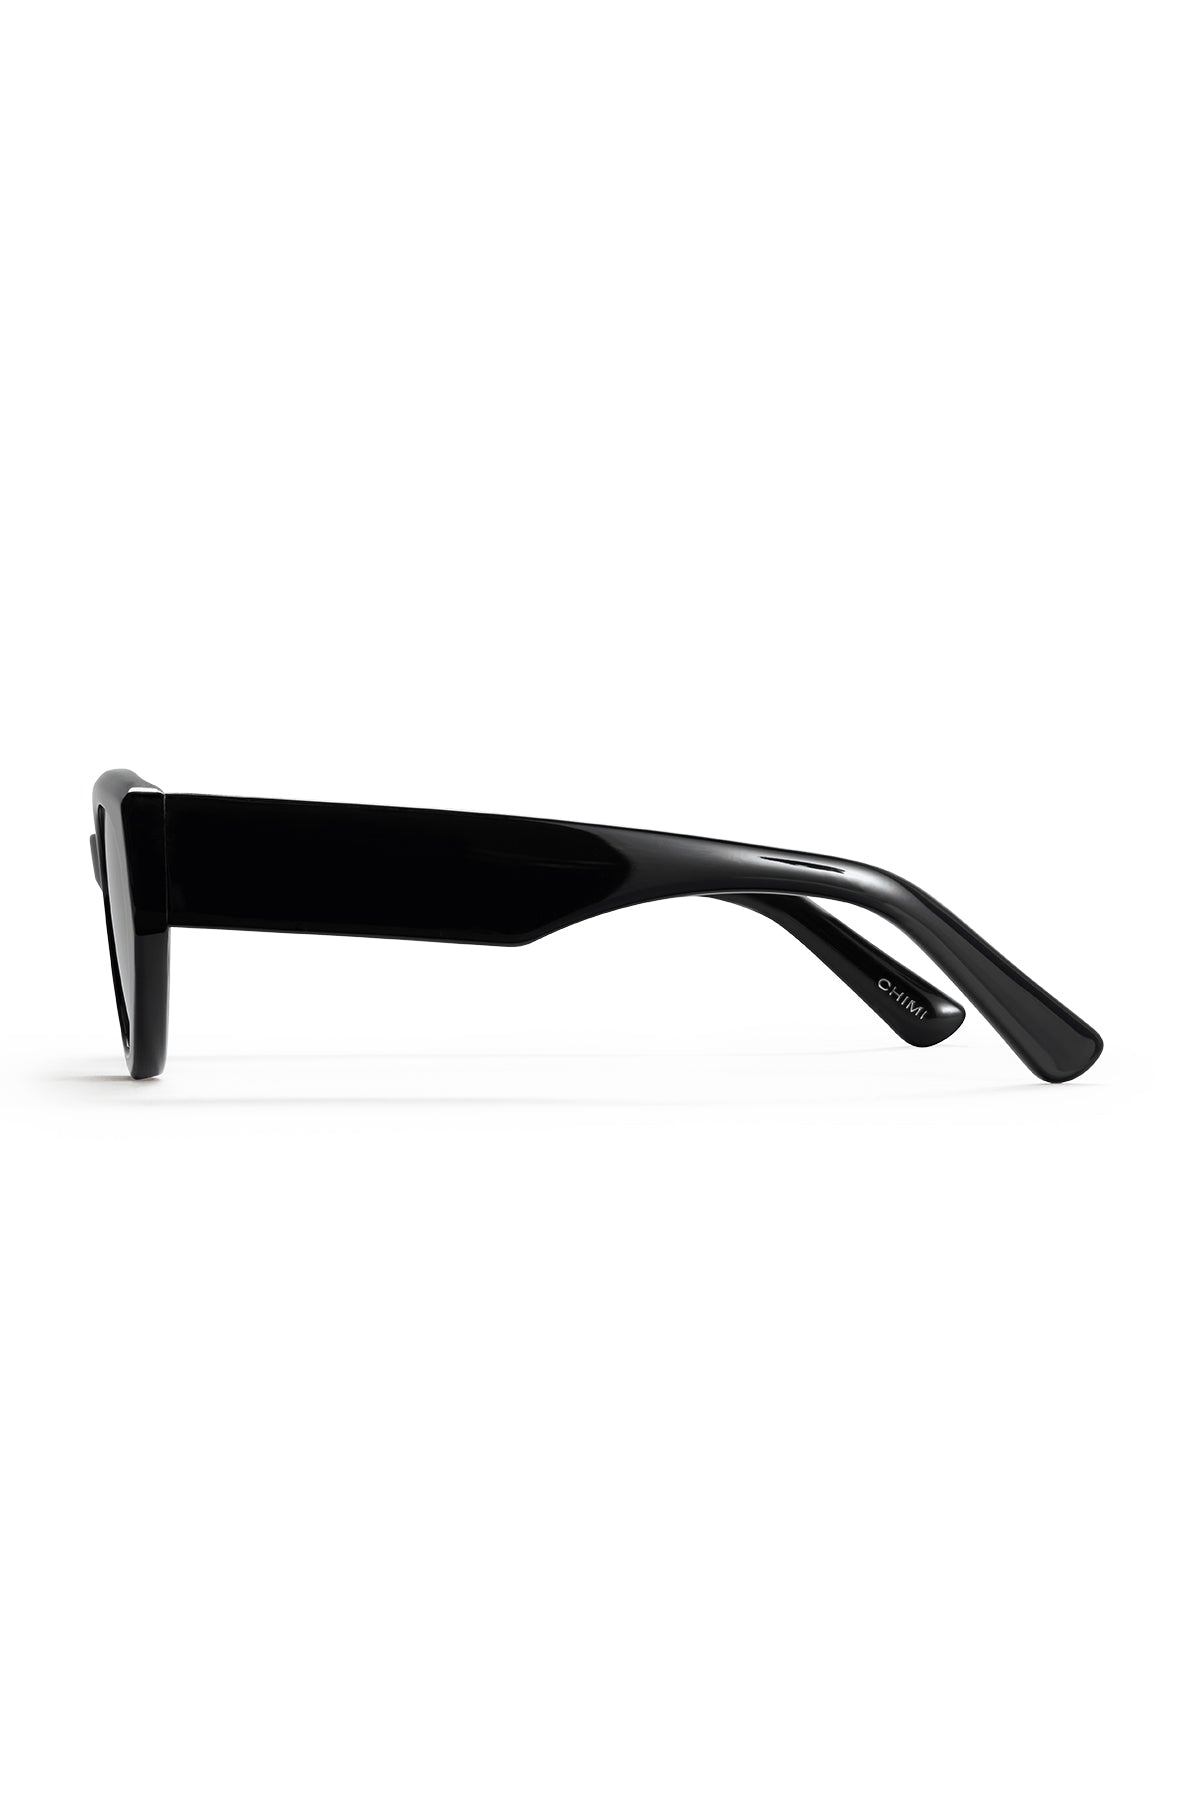   Chimi 06 Sunglasses Black Side 